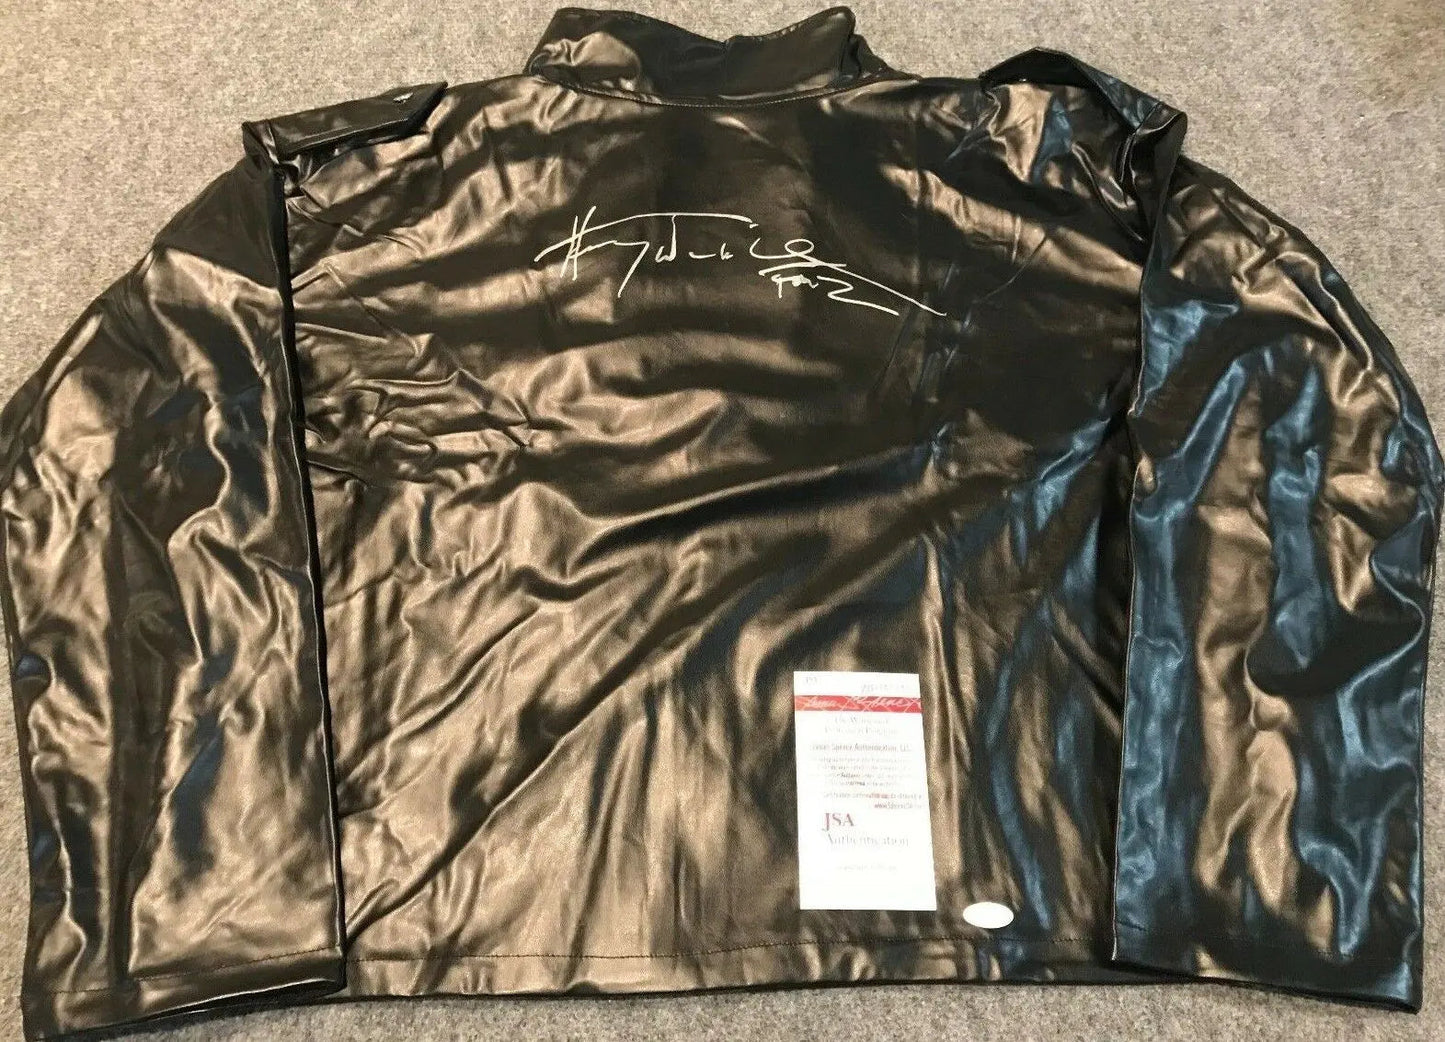 MVP Authentics Henry "Fonz" Winkler Autographed Signed Faux Leather Jacket Jsa Coa 153 sports jersey framing , jersey framing